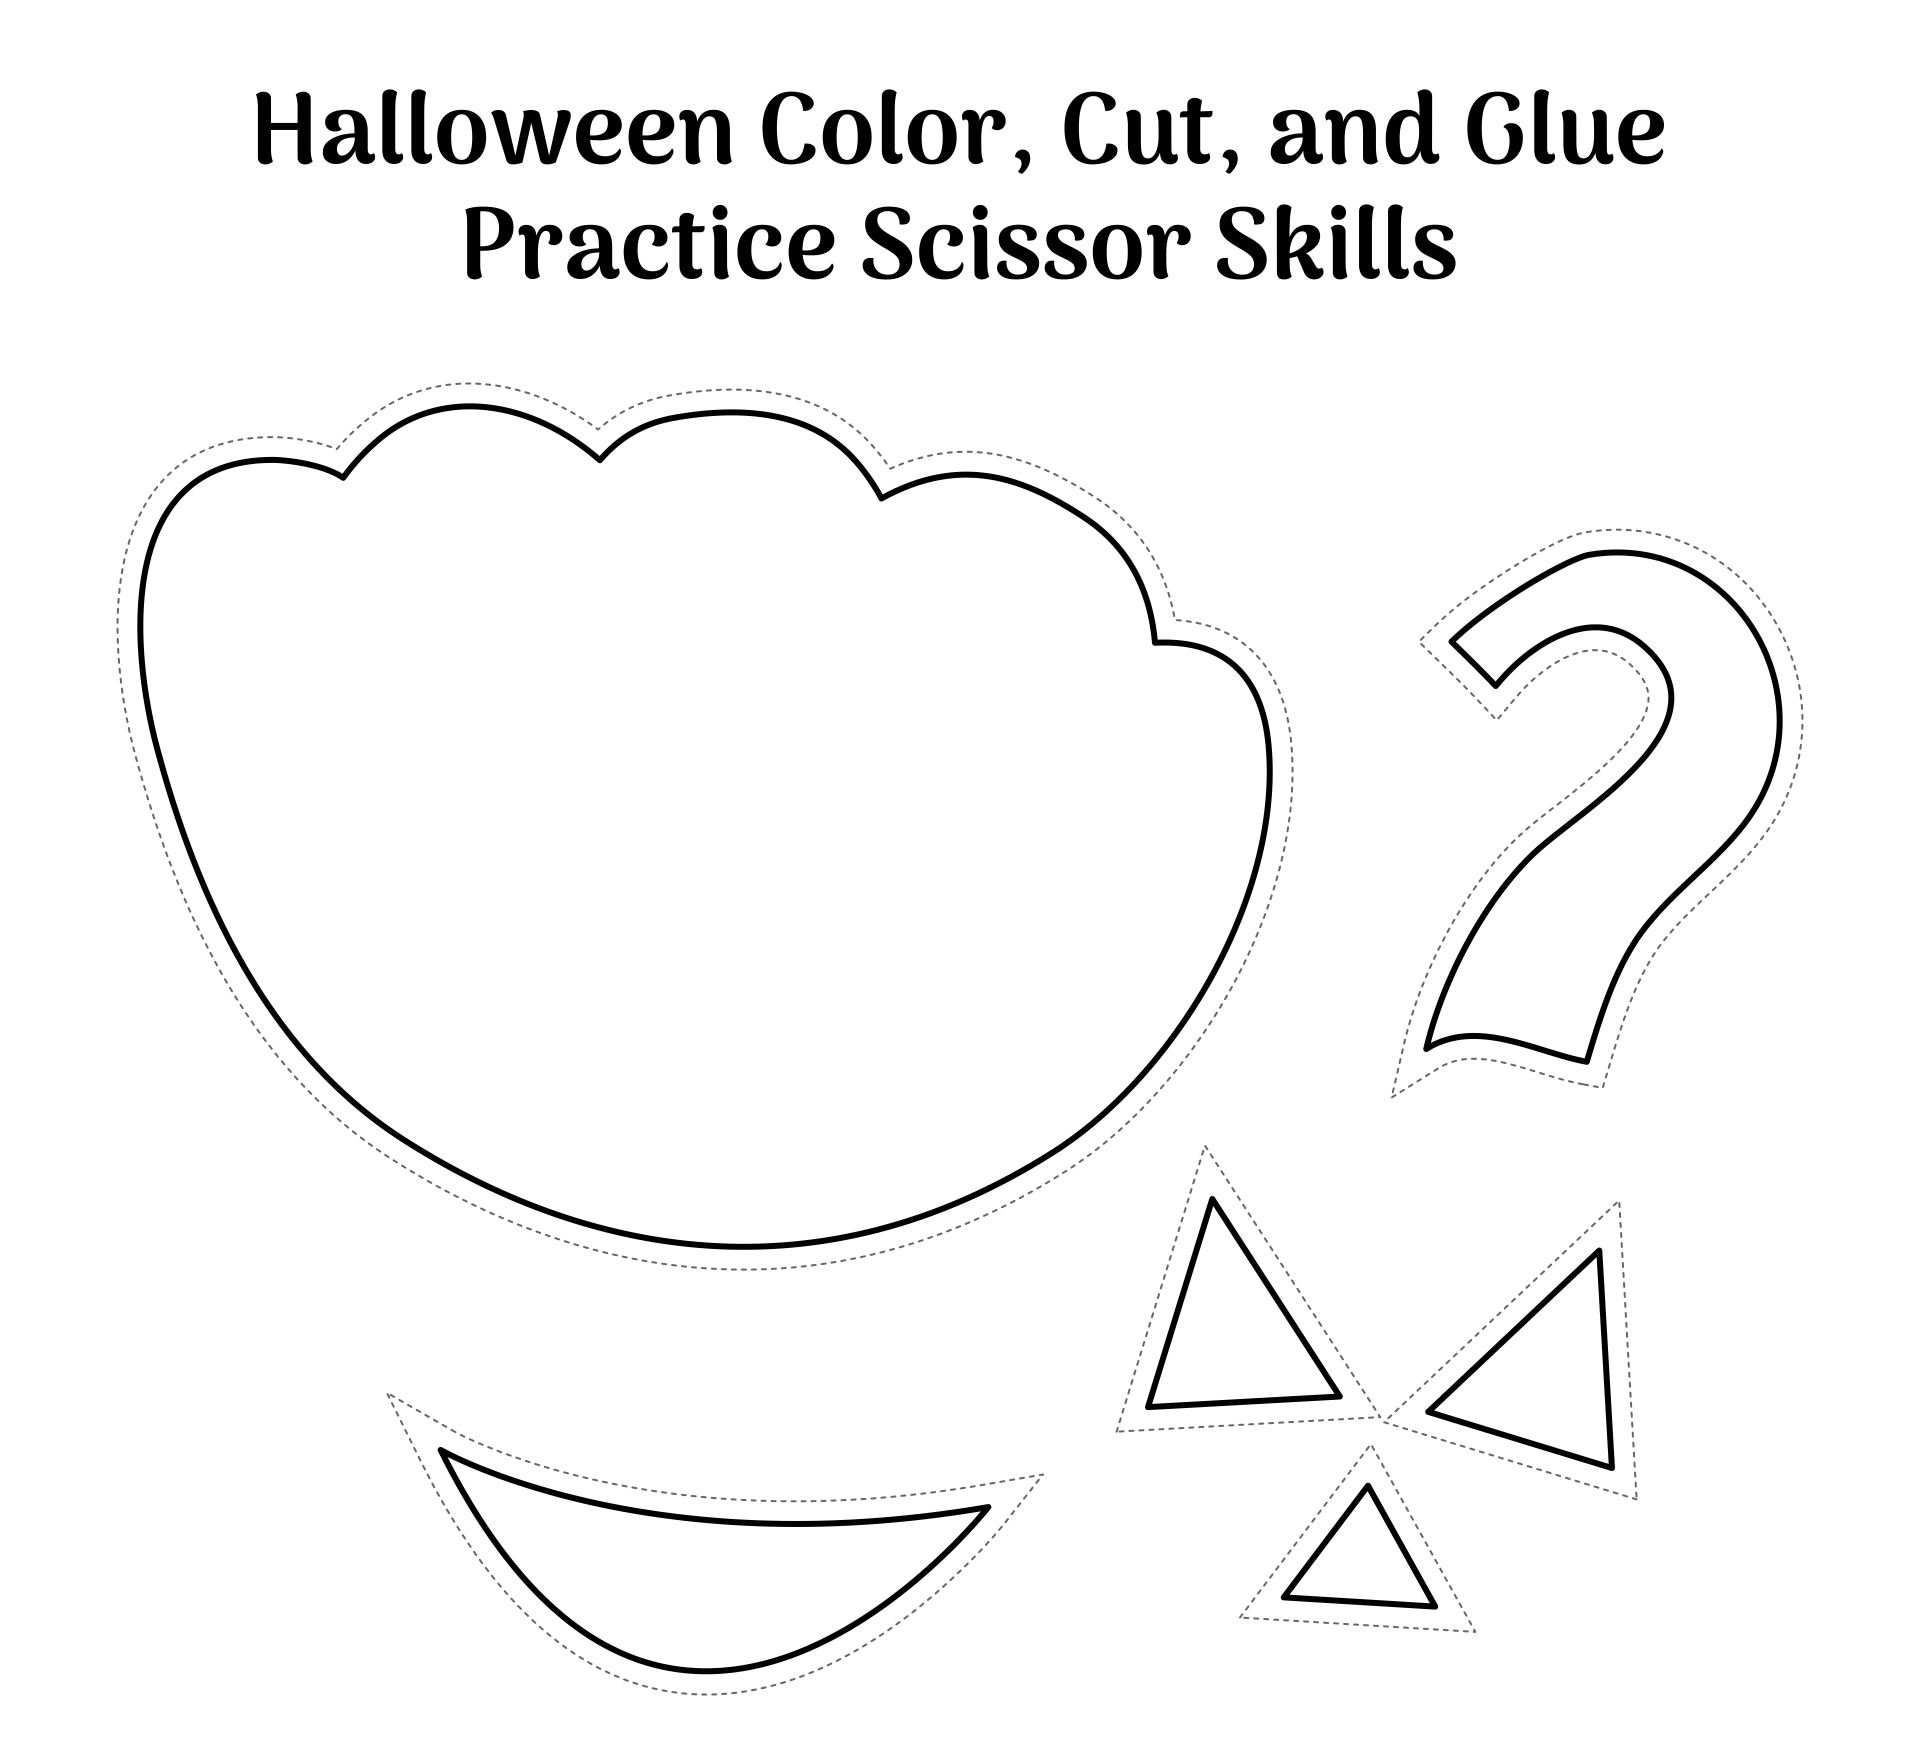 Color Cut Glue Halloween Practice Scissor Skills Printable Template